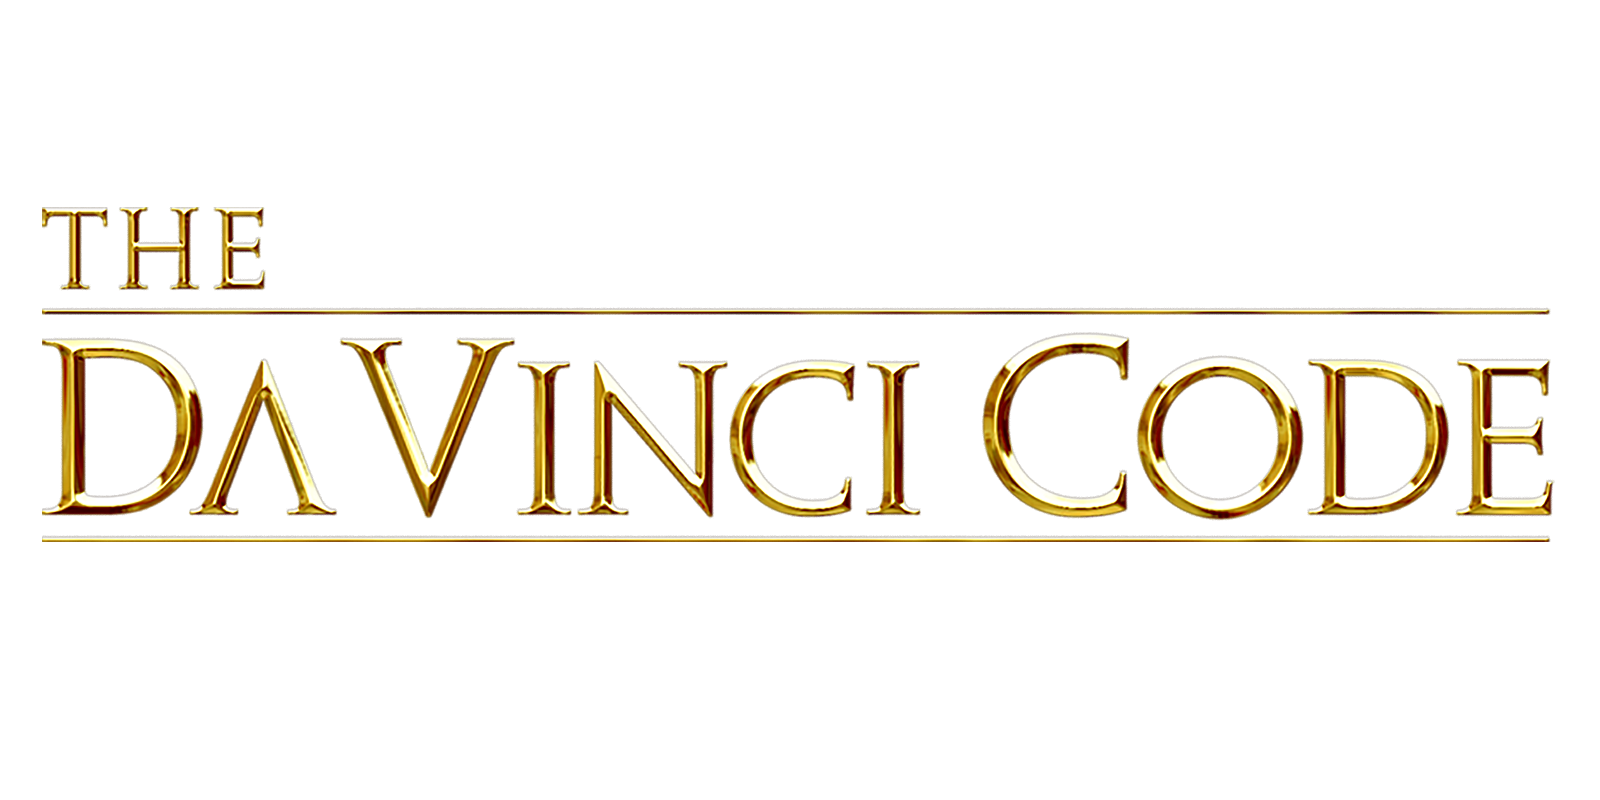 the da vinci code movie